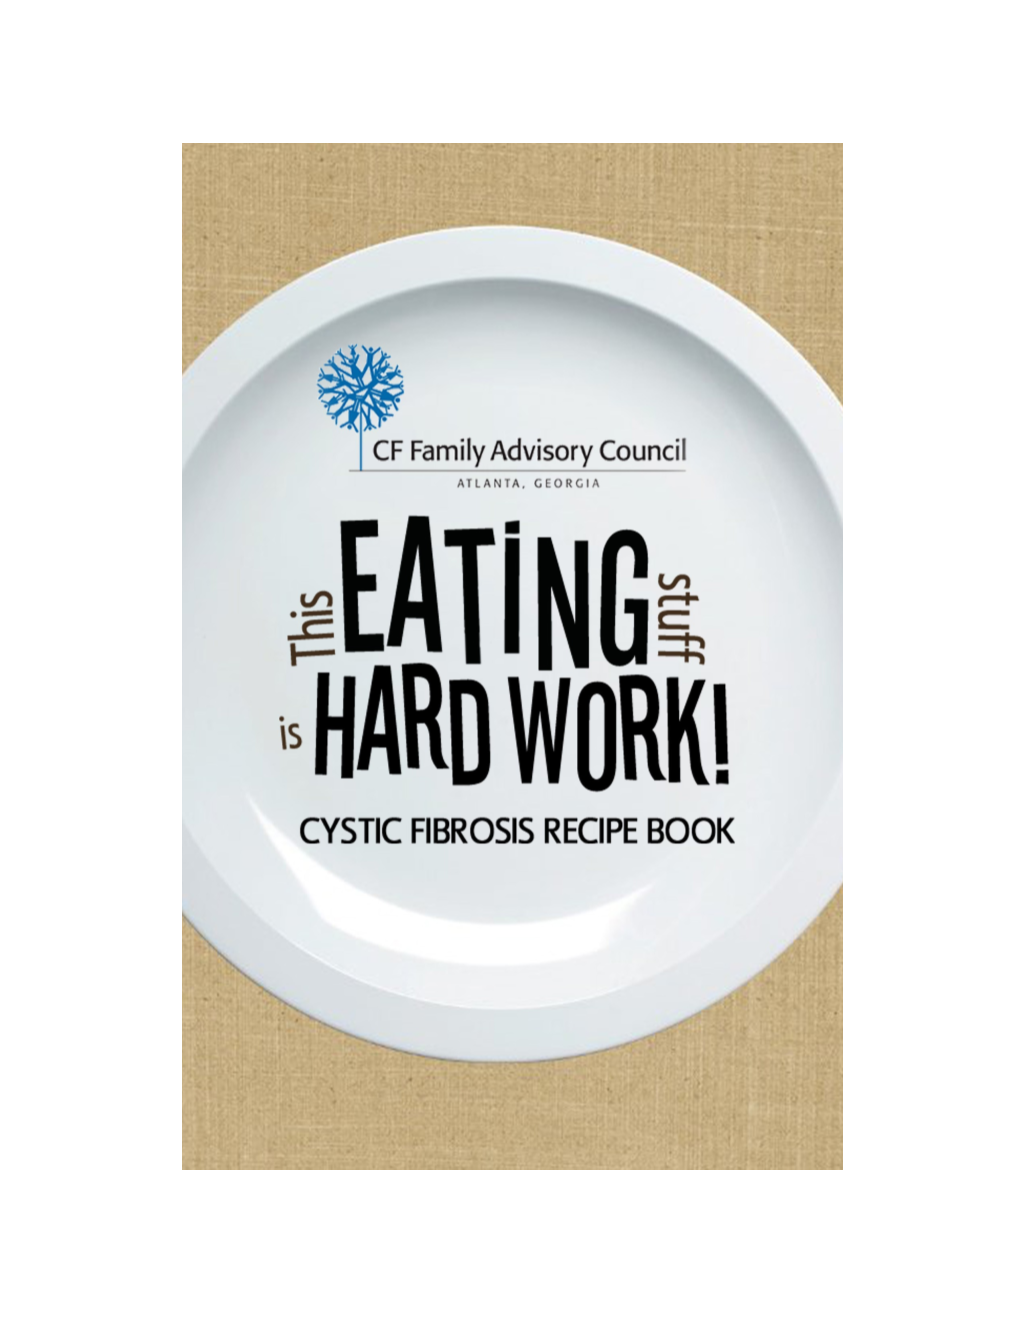 This Eating Stuff Is Hard Work! Recipe Book PDF 1 MB